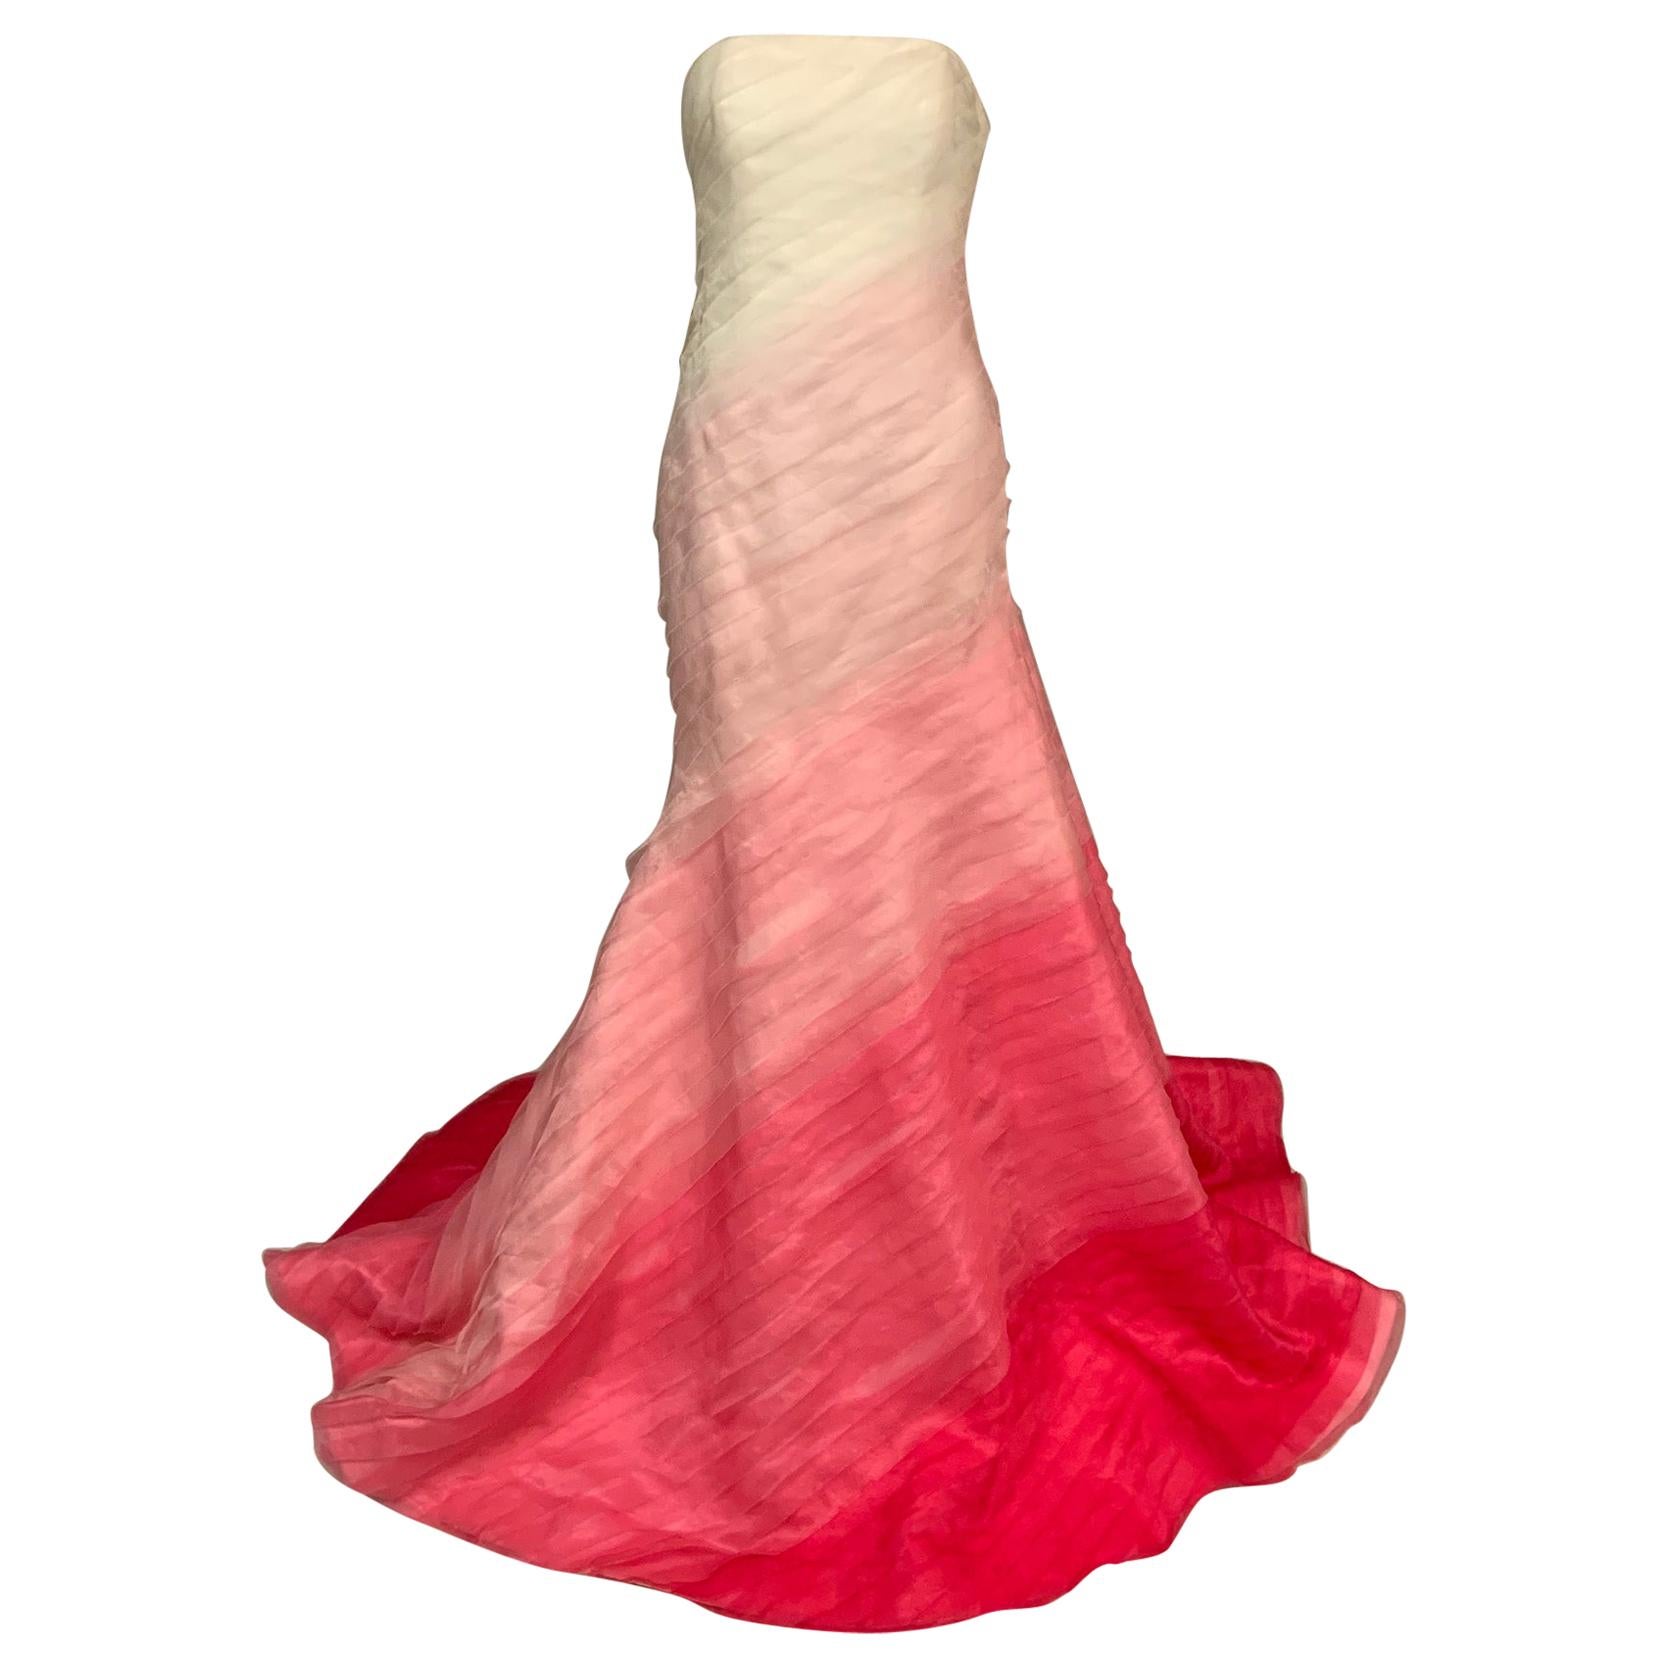 Lilly Pulitzer Silk Organza White to Shocking Pink Evening or Wedding Dress